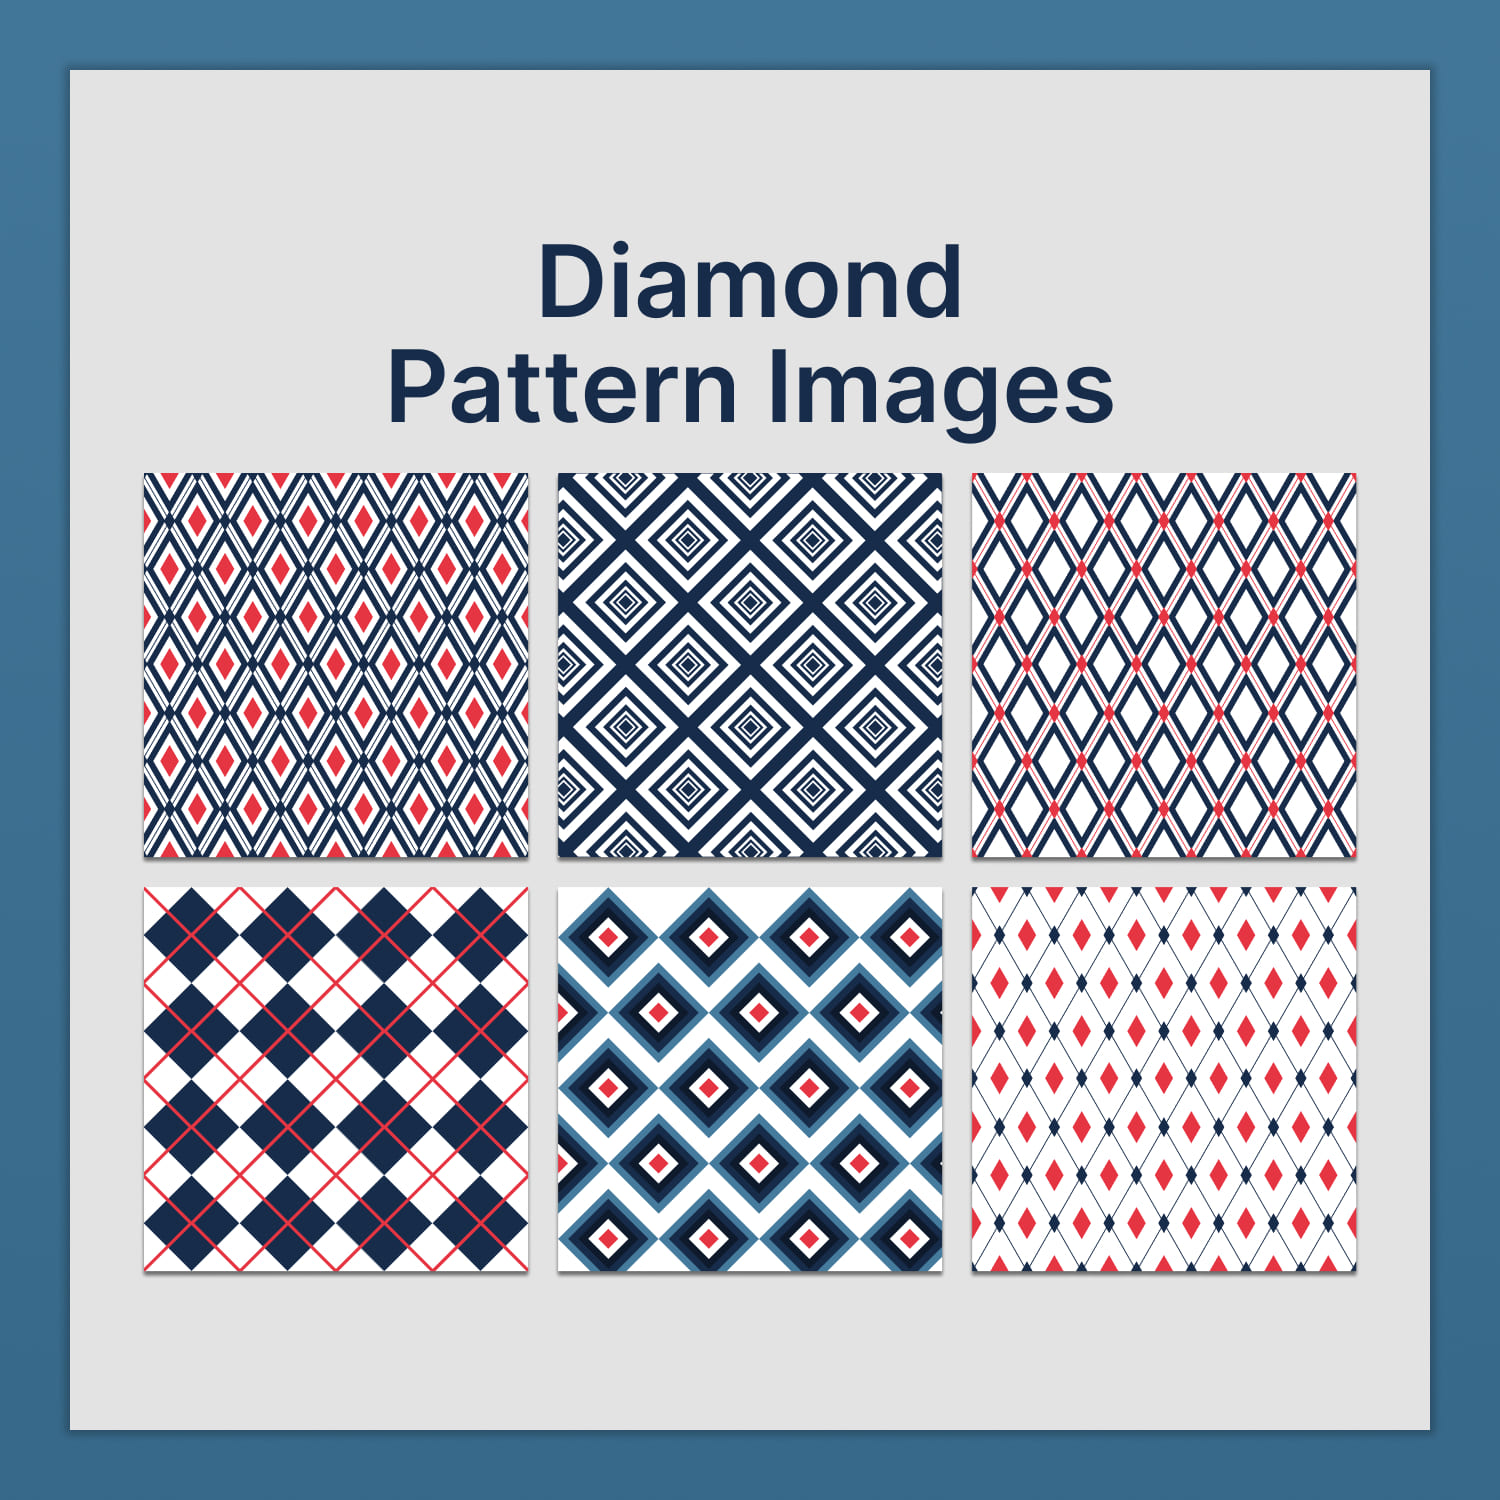 Diamond Pattern Images.